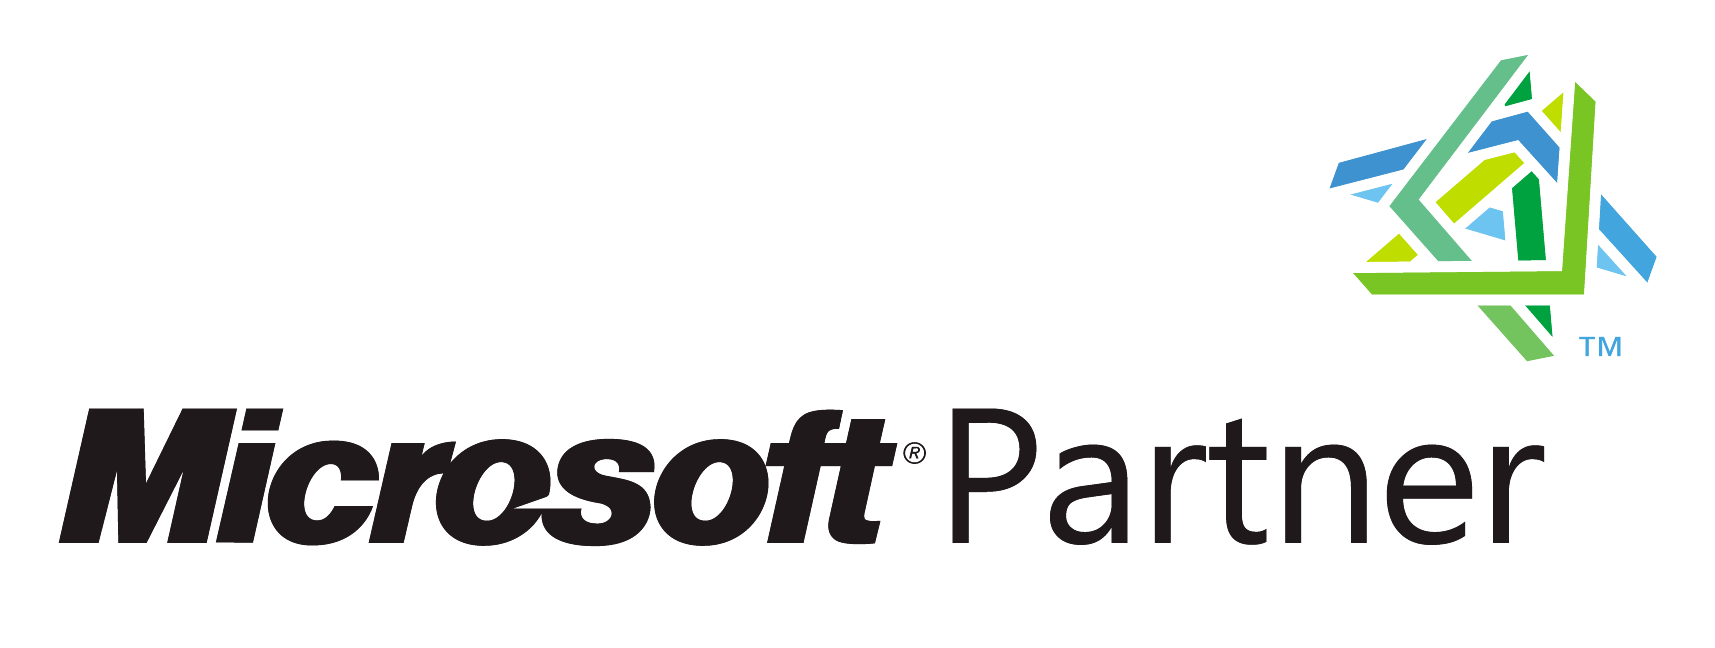 Partner Logo - Microsoft Partner Logo Firefly Resources